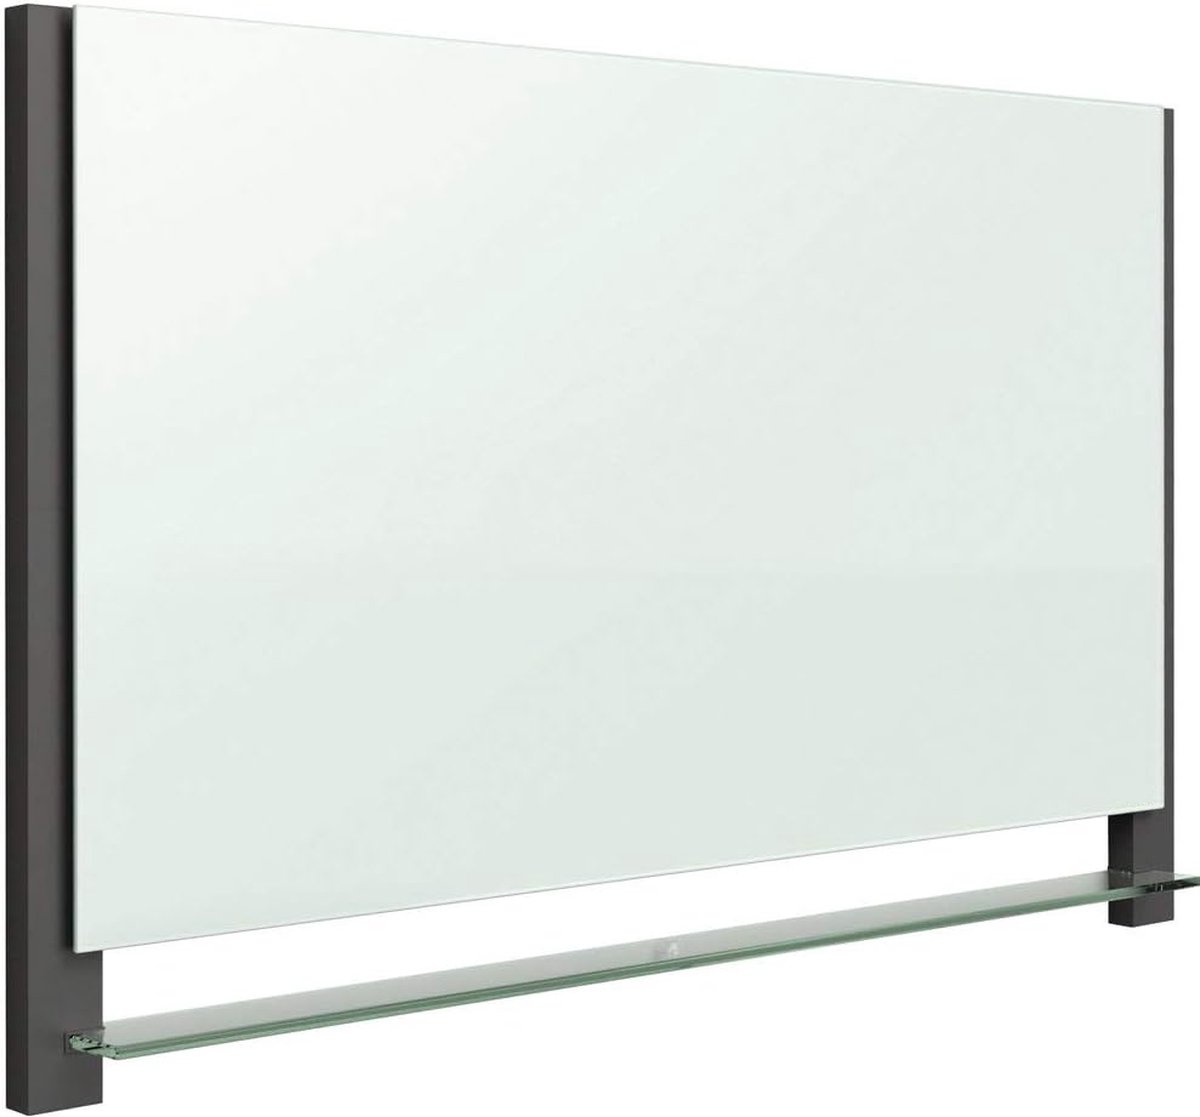 Faseras Whiteboard/Glassboard - Glas - Magnetische Bord aan de Wand - Inclusief Marker - 90 x 60 cm